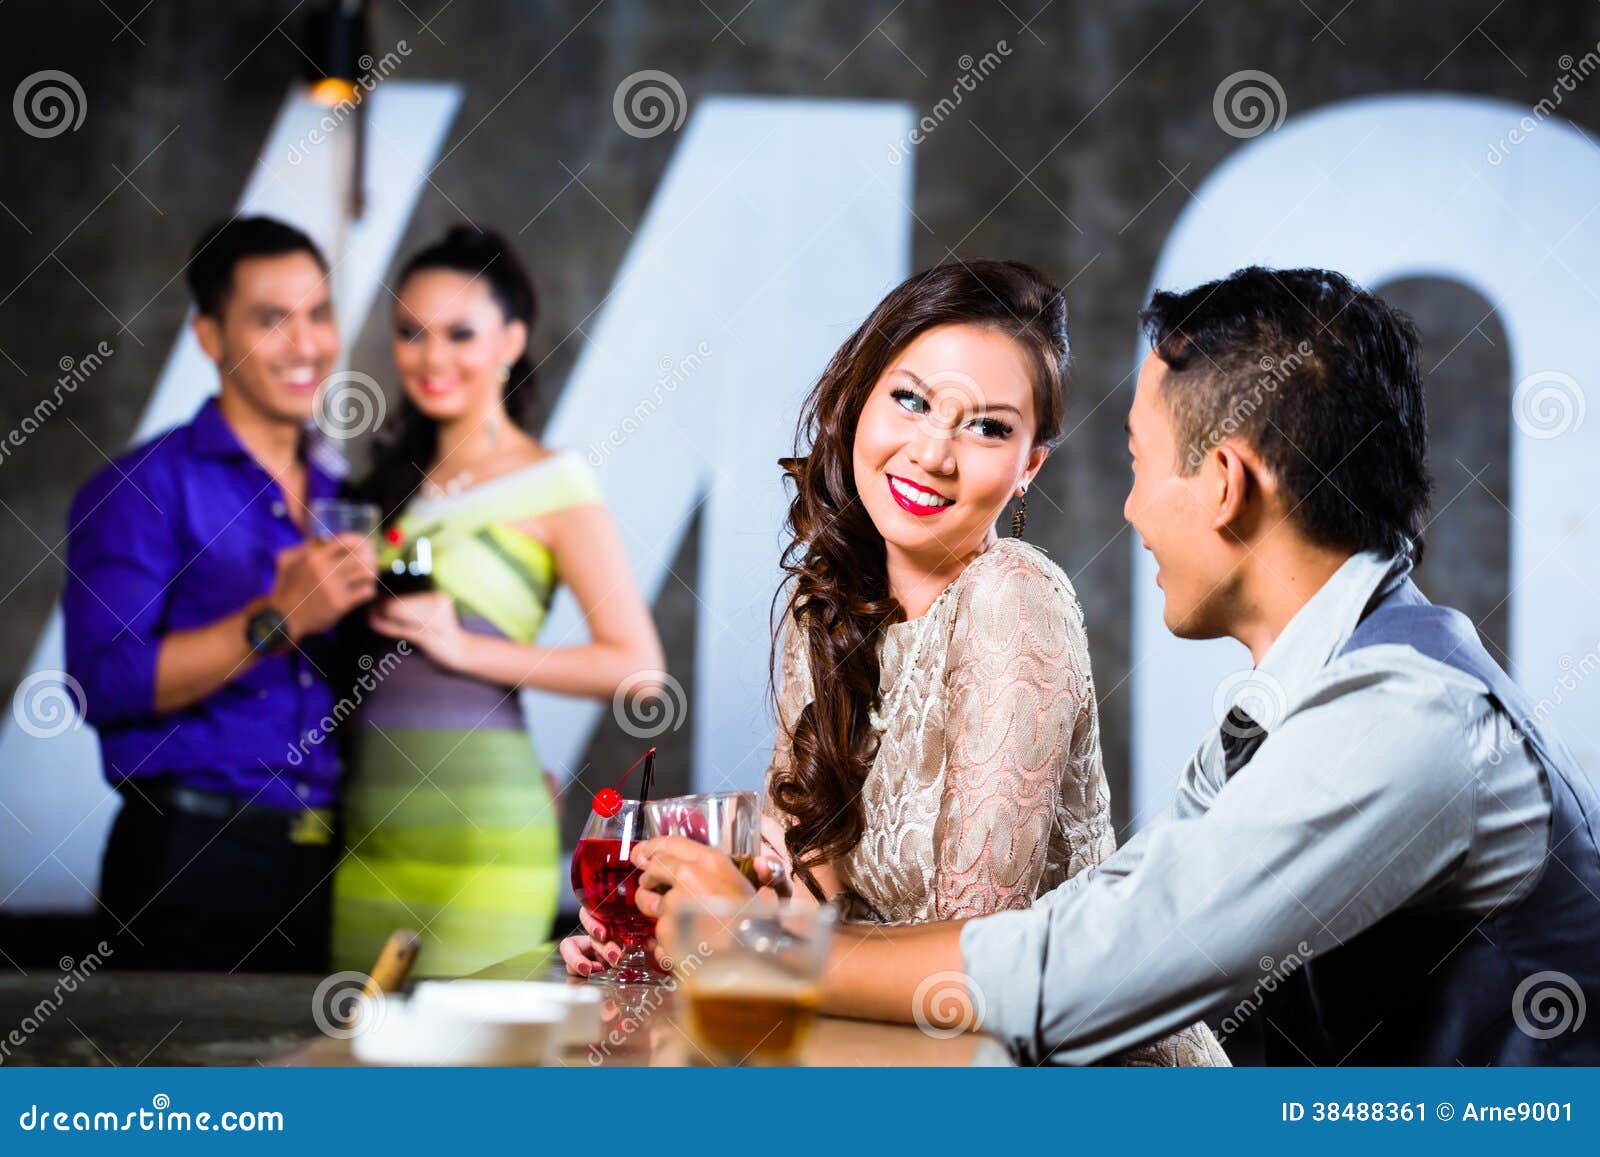 asian couples flirting and drinking at nightclub bar